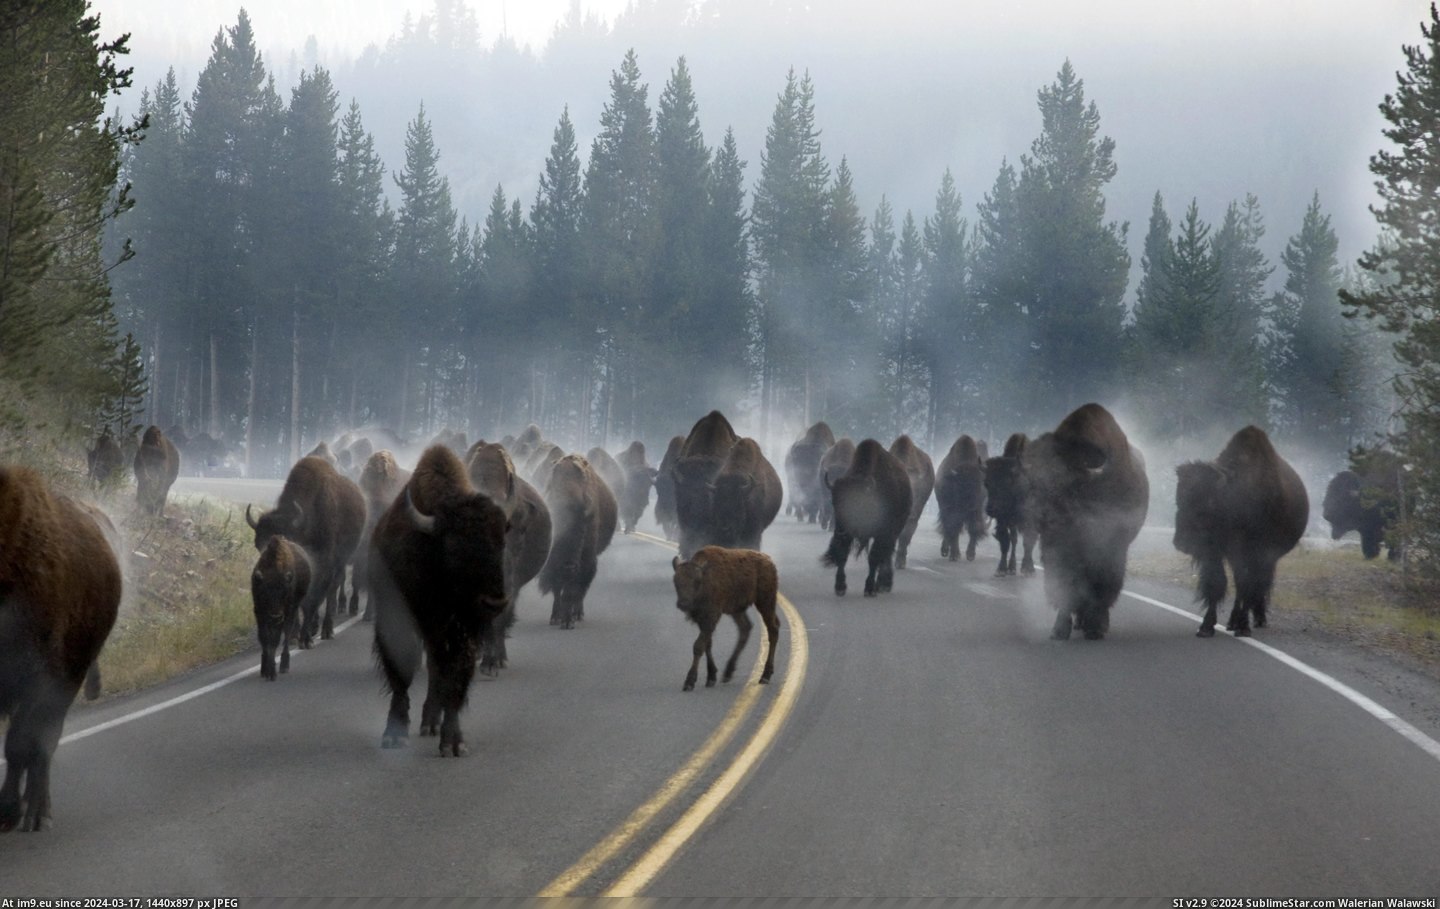 #Park #Morning #Traffic #Yellowstone #Rush #National #Hour [Pics] Morning rush hour traffic in Yellowstone National Park Pic. (Bild von album My r/PICS favs))